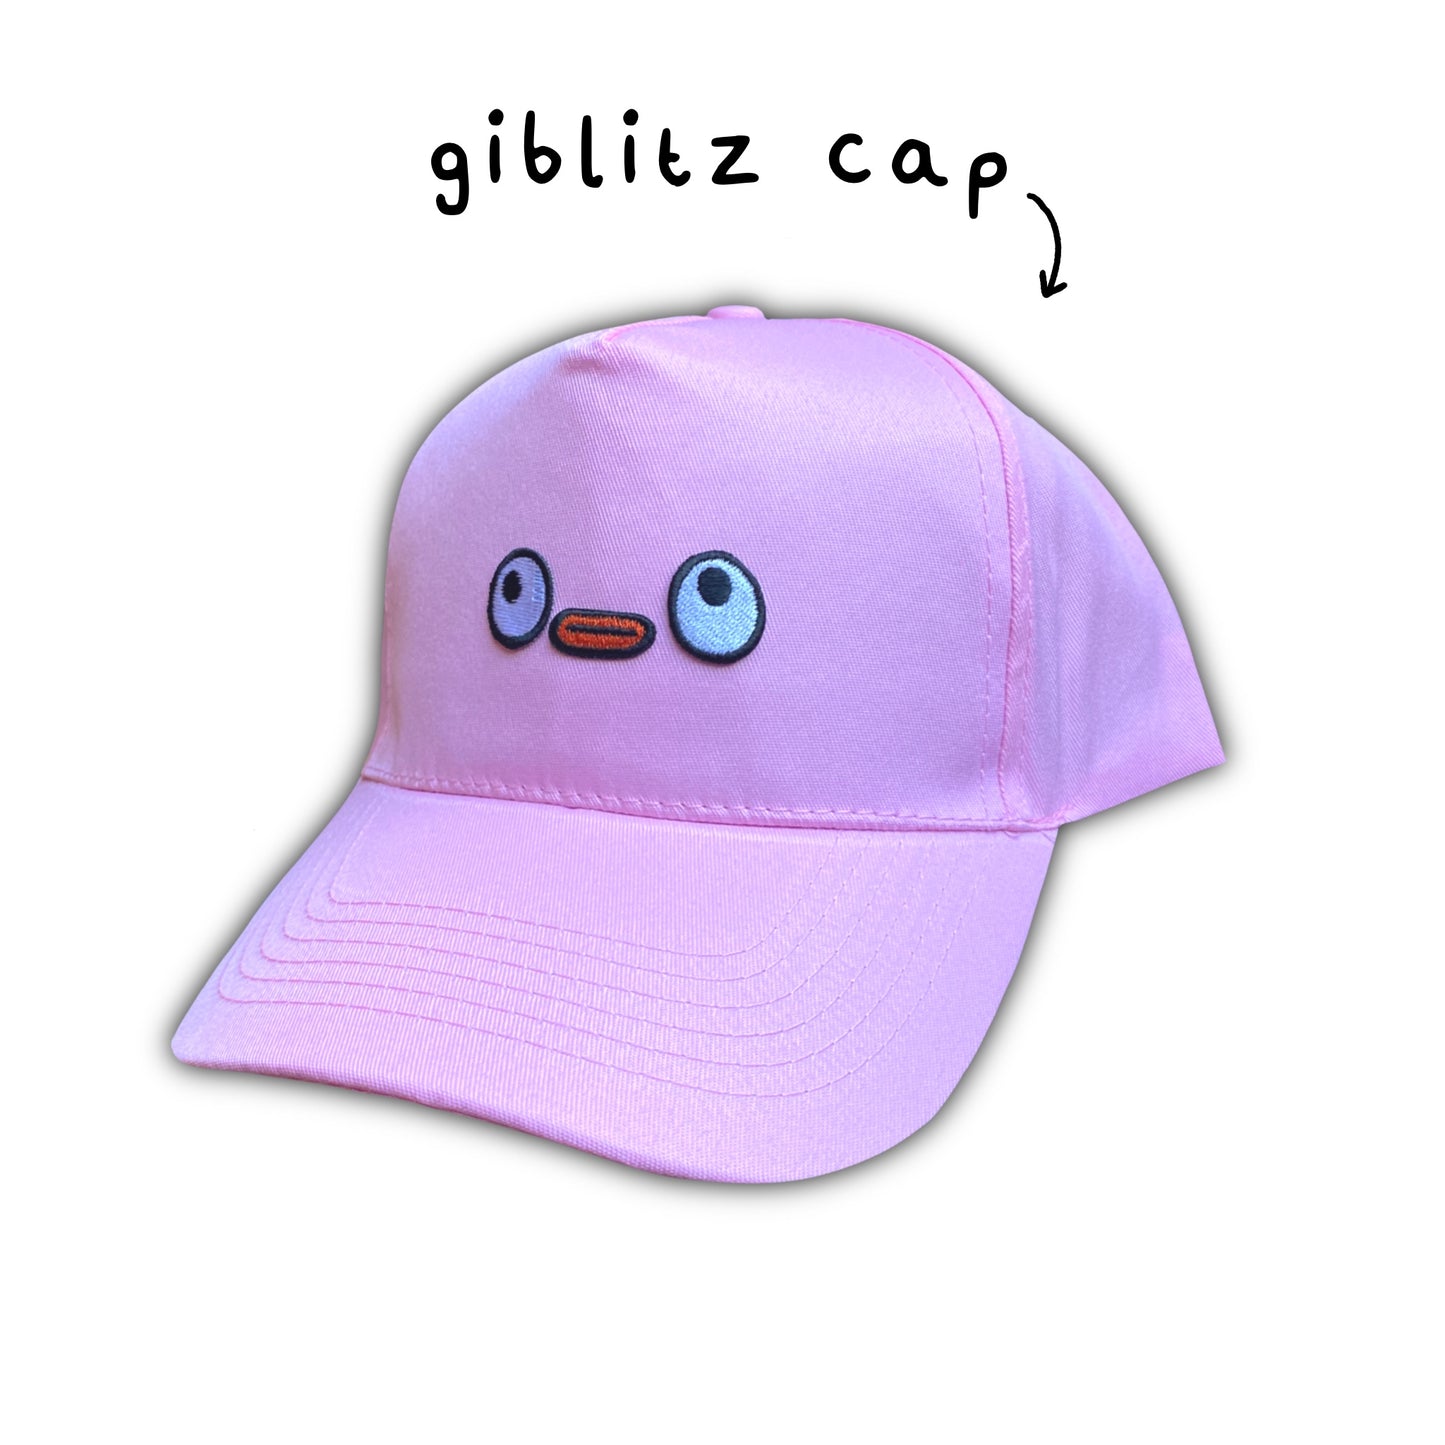 8. pink giblitz cap